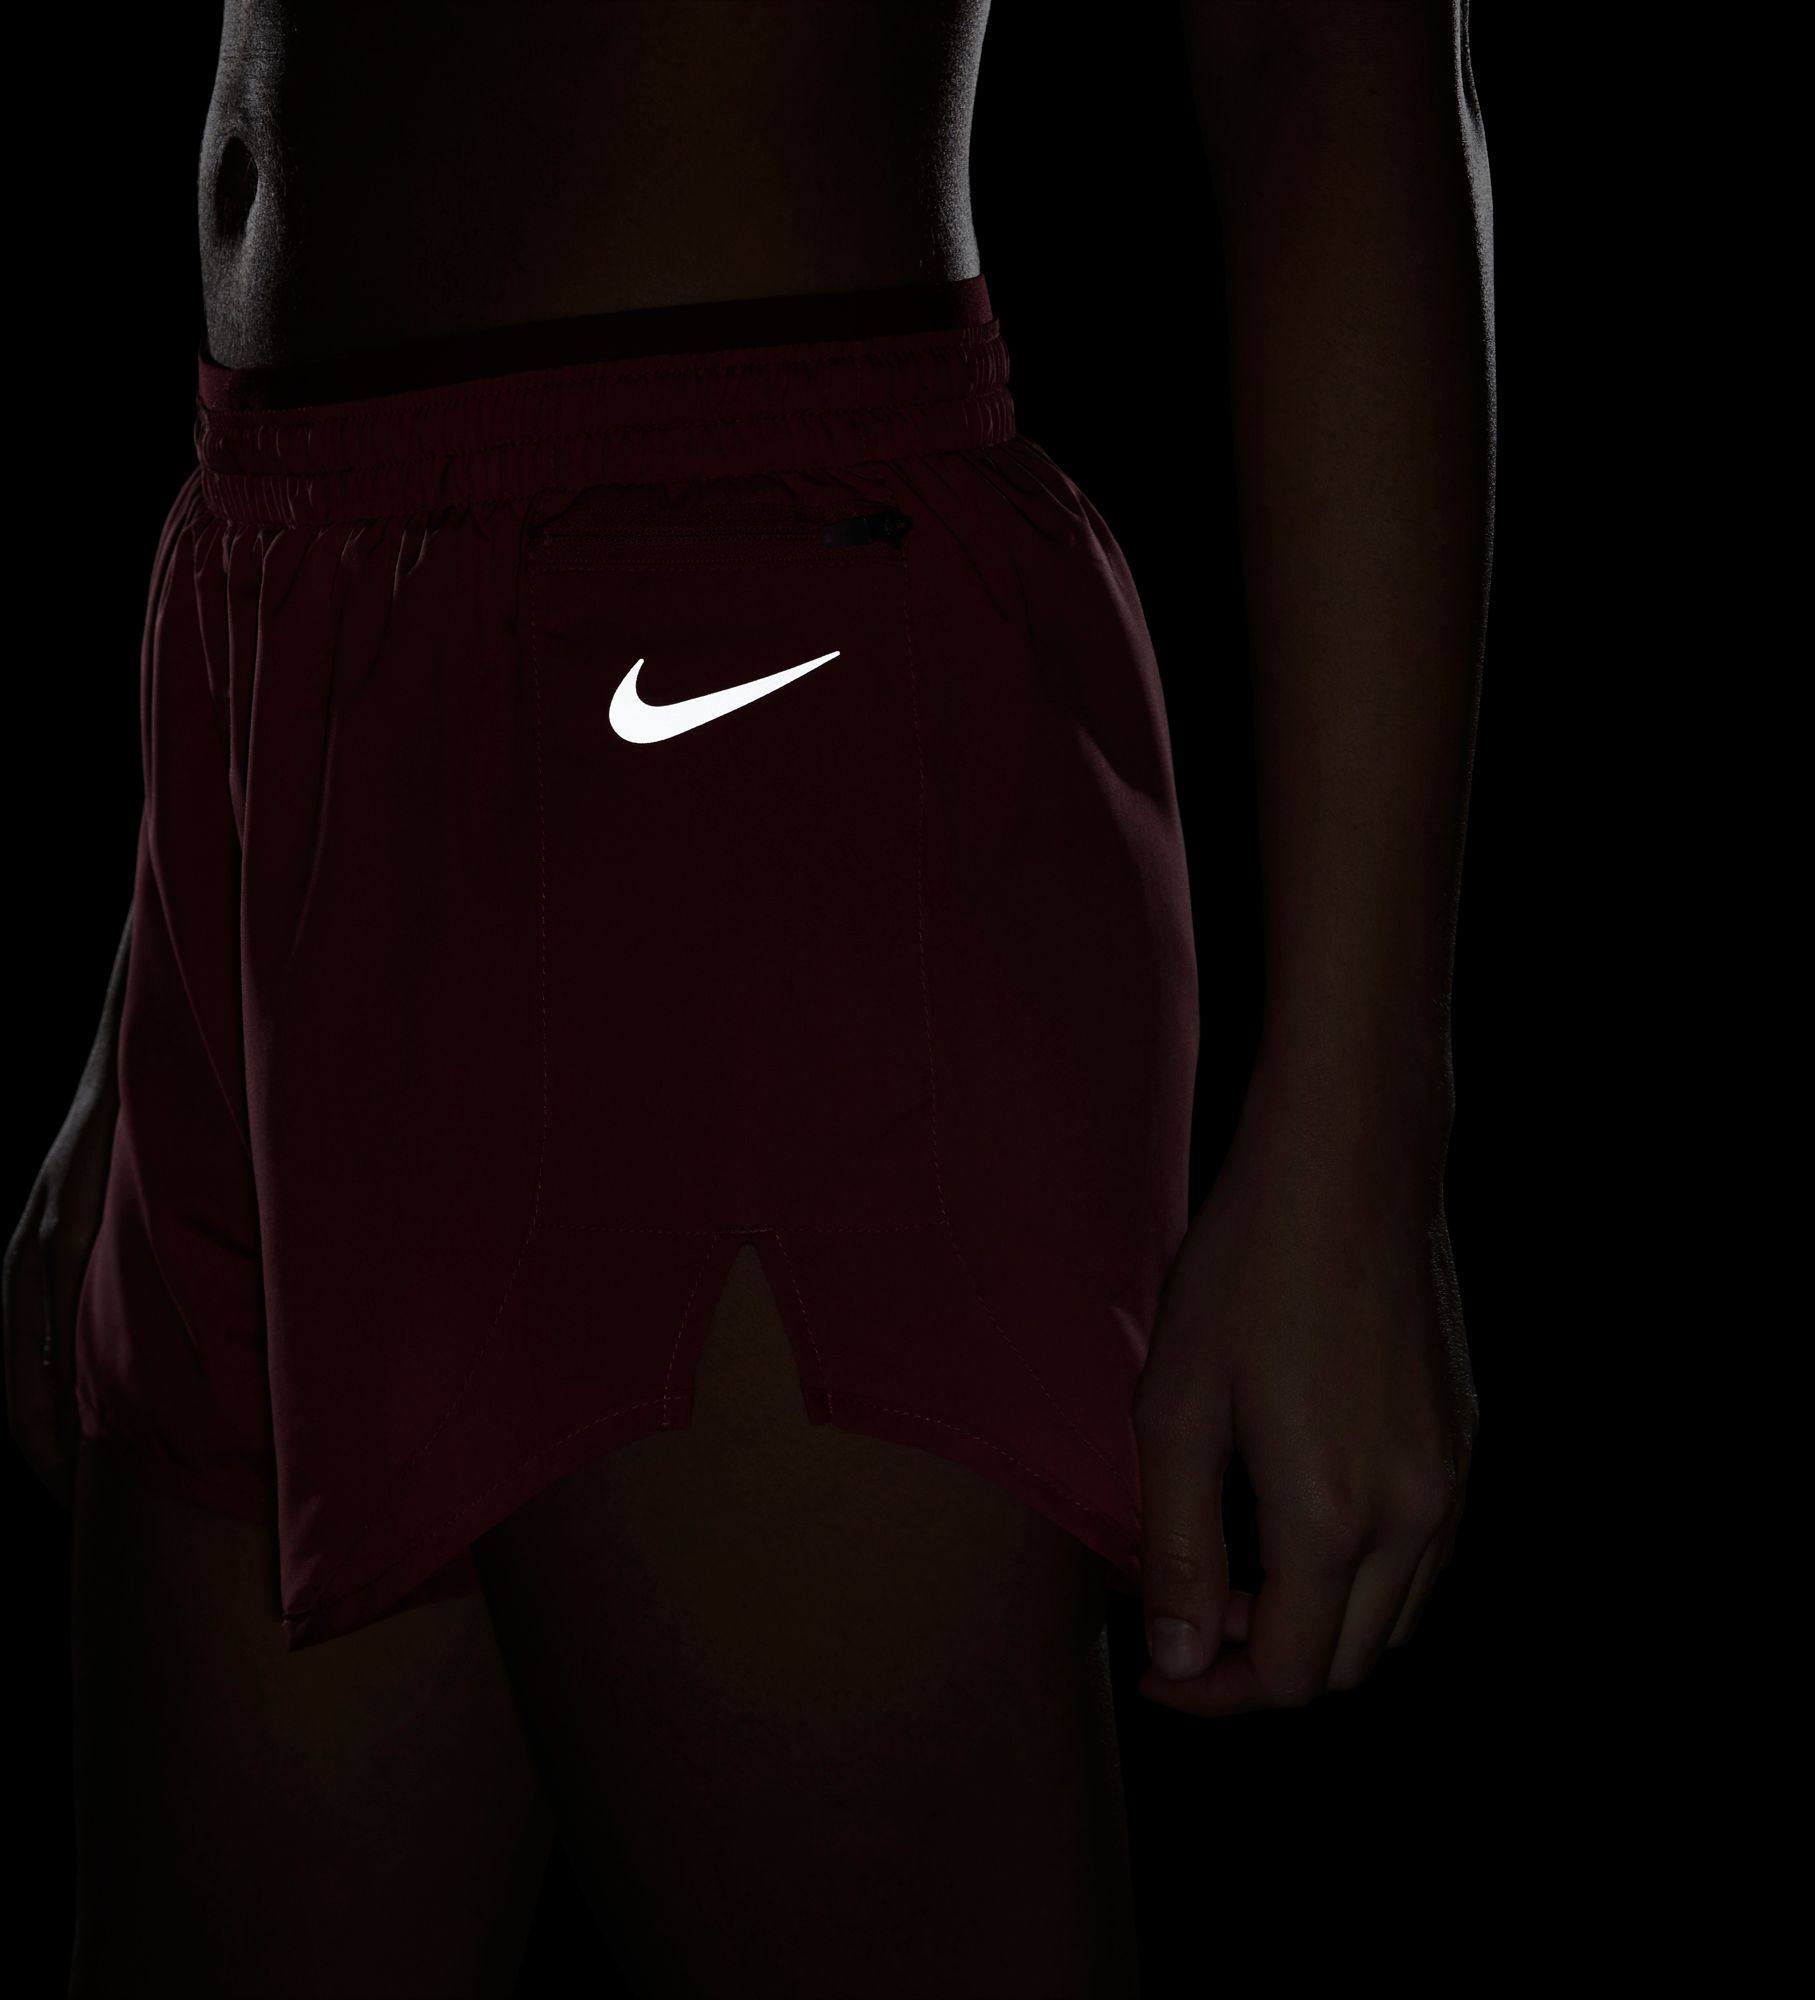 Nike Women's Tempo Luxe 3” Running Shorts